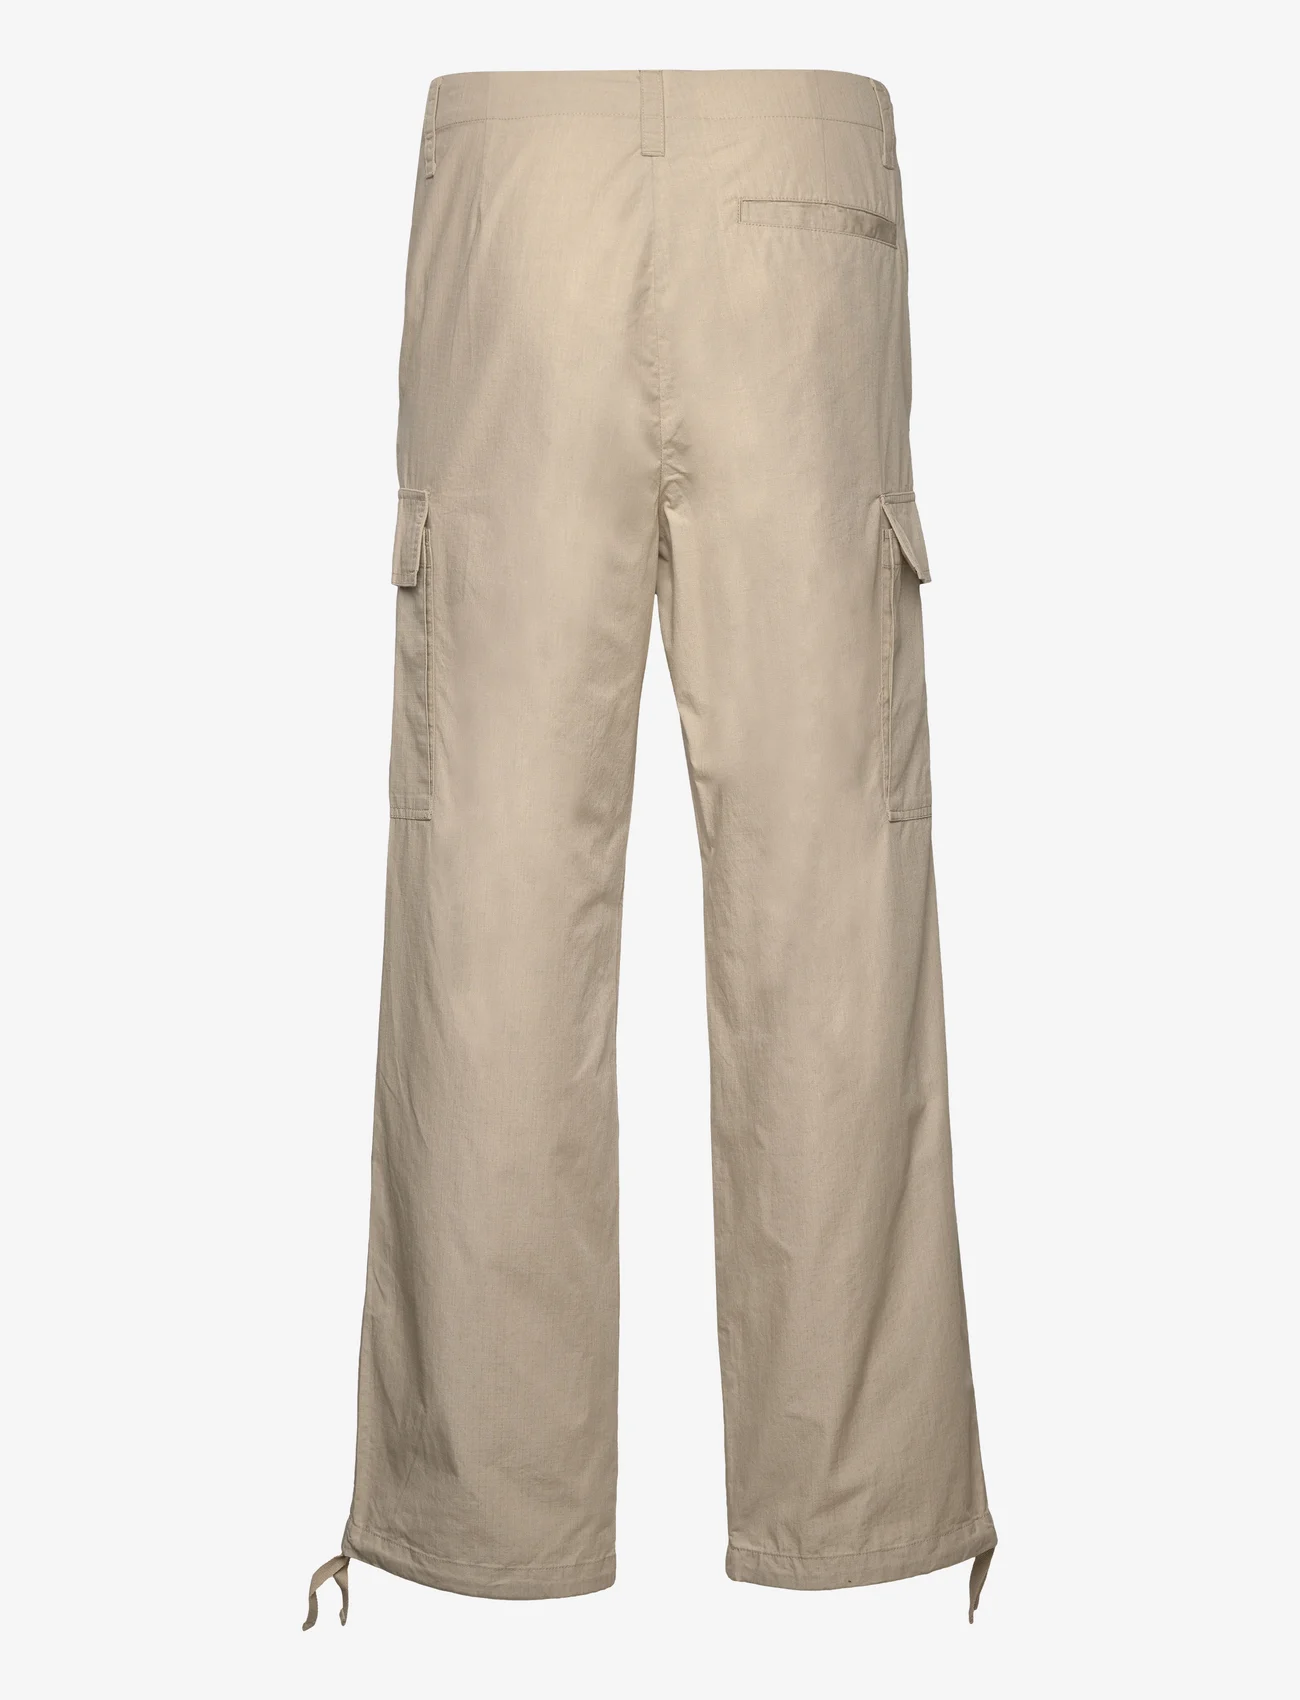 Samsøe Samsøe - Ross trousers 14740 - cargohose - agate gray - 1